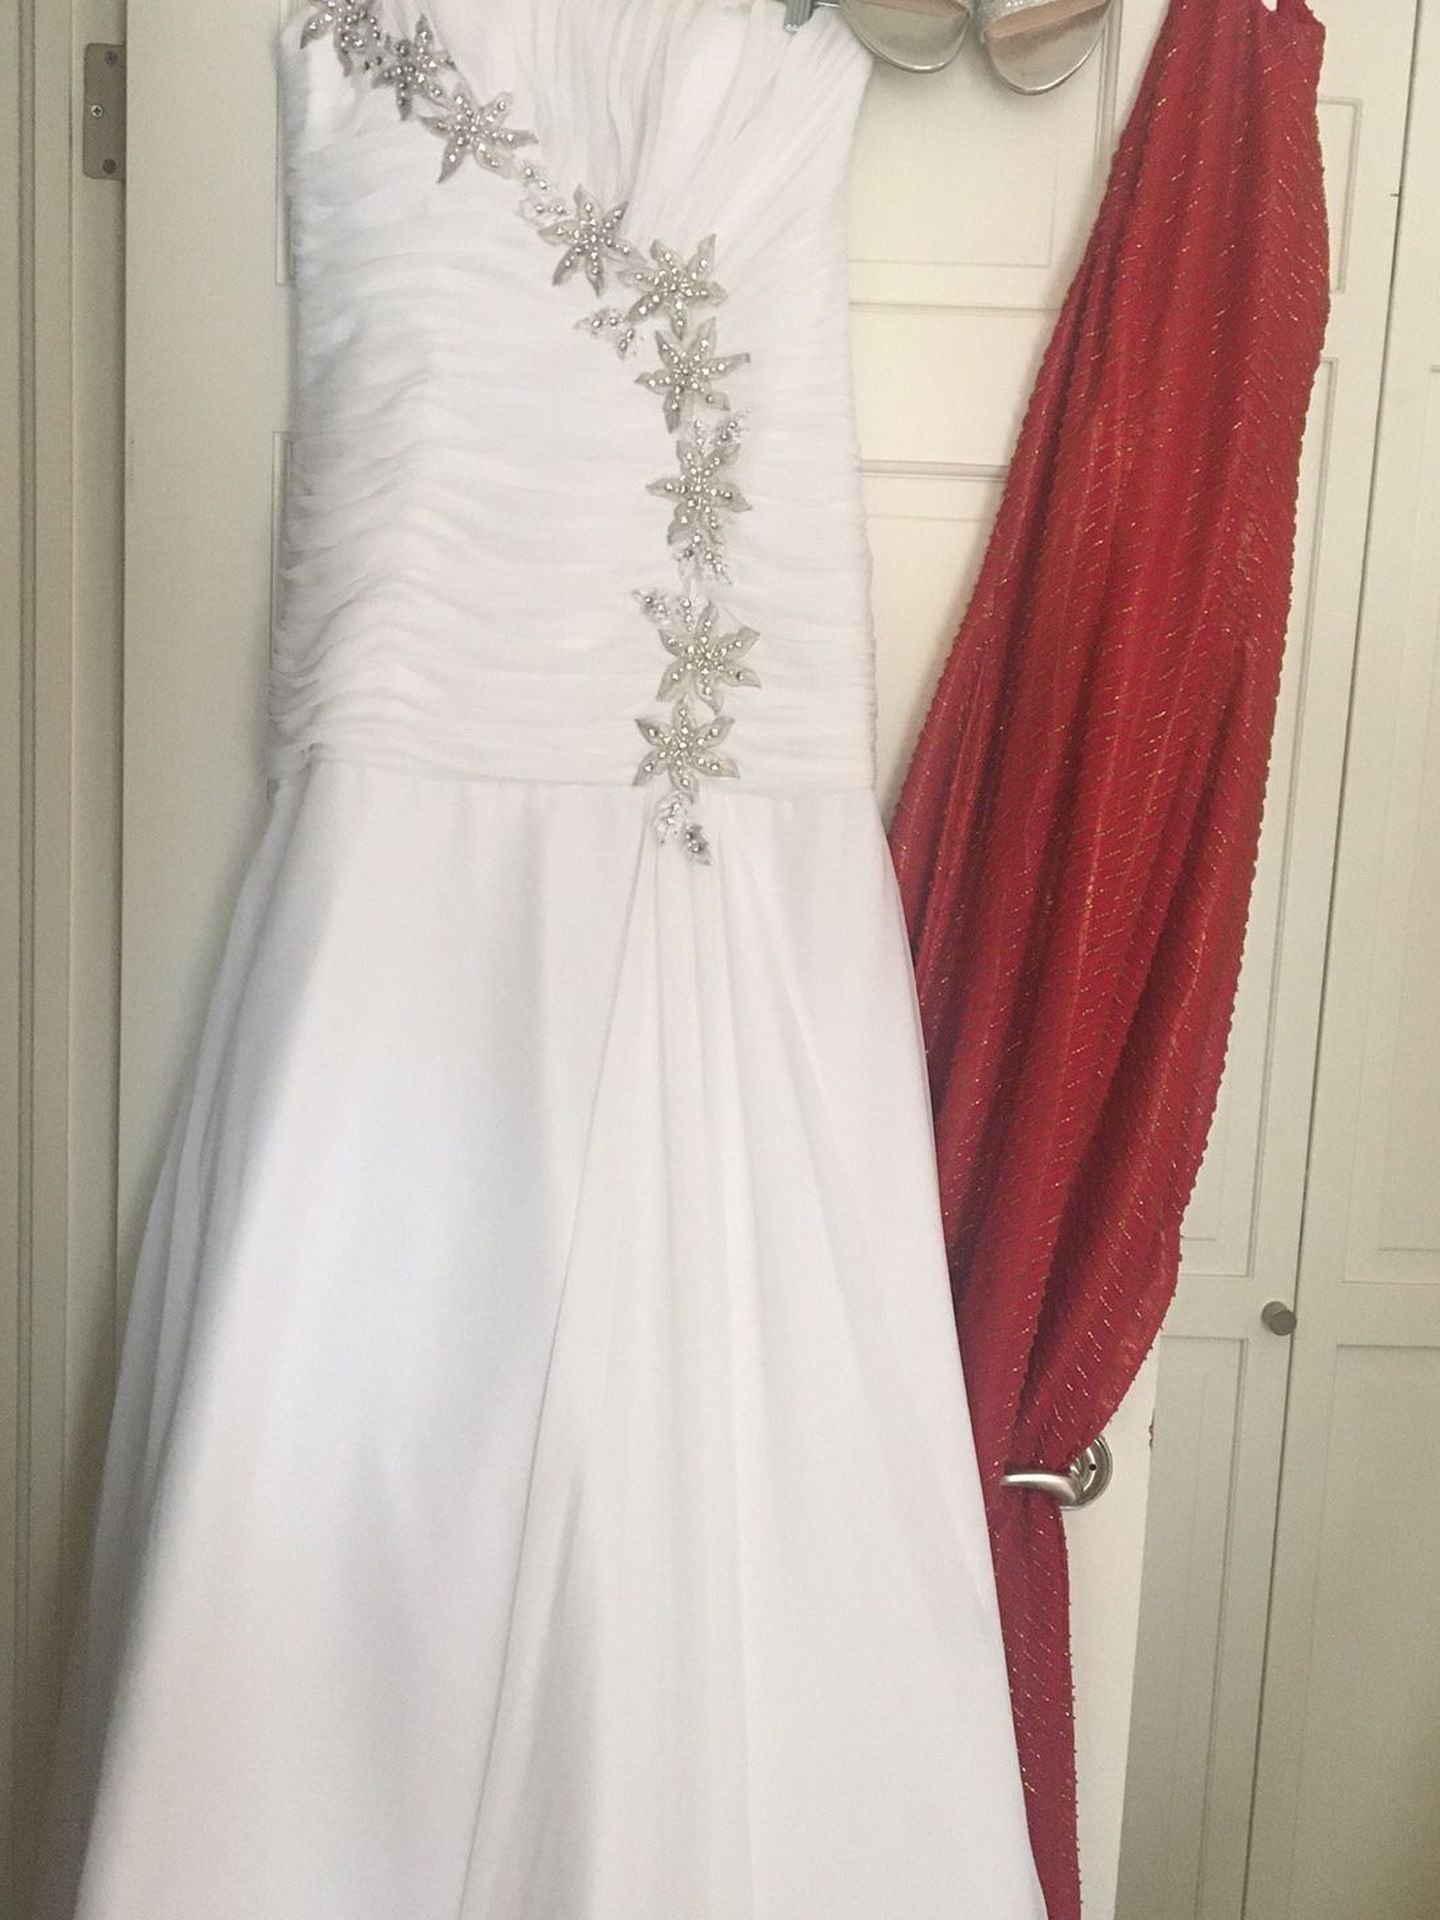 Formal gowns/ dresses/ wedding dresses $100-400